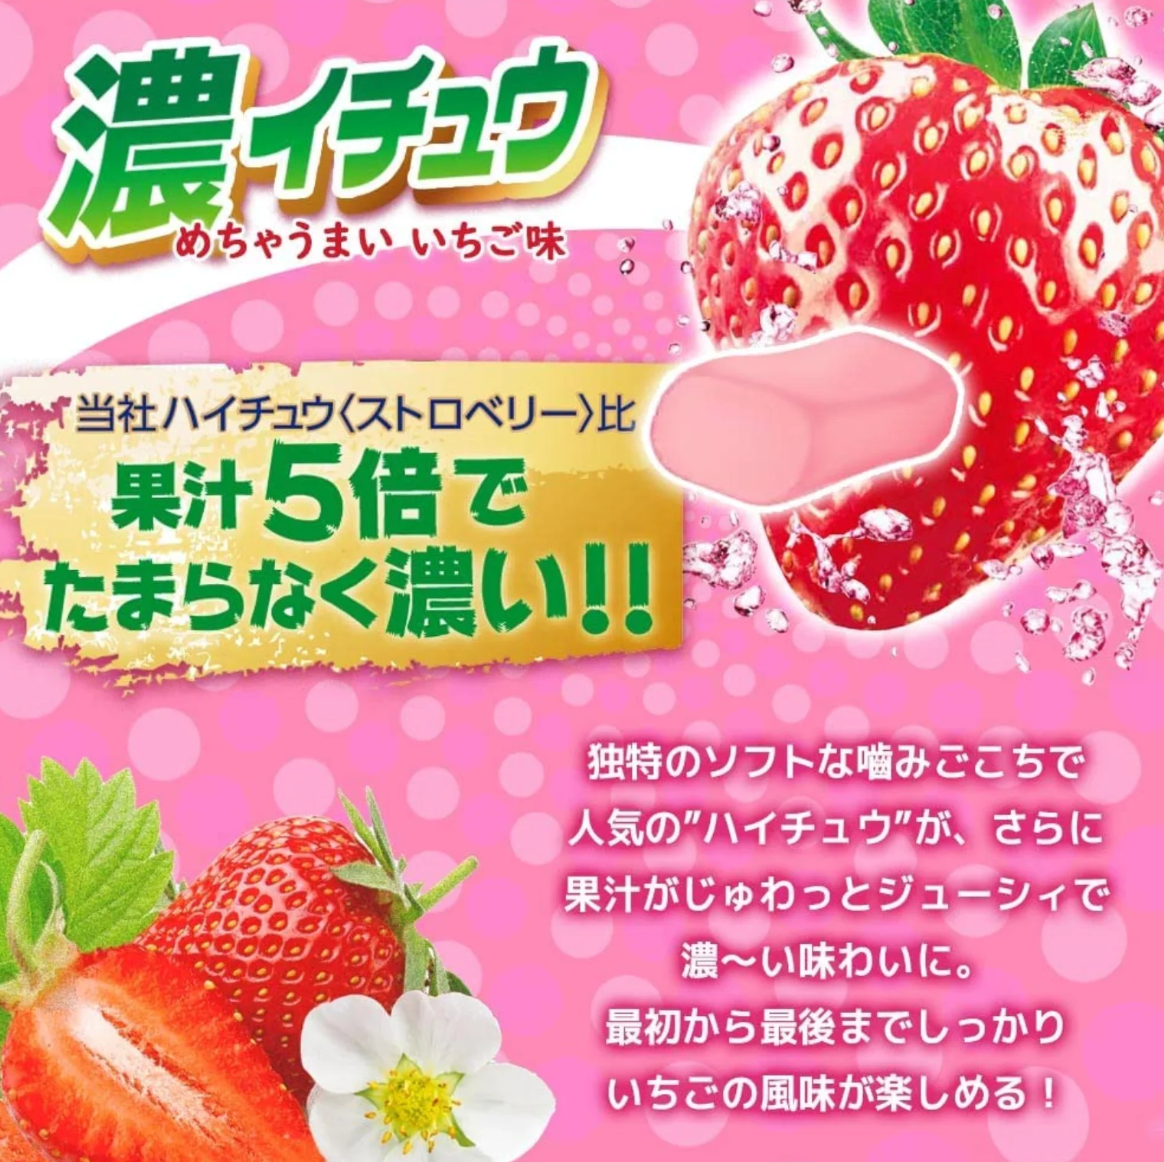 Morinaga - Hi-Chew - Premium Candy - Rich Strawberry - 32g (Japan)